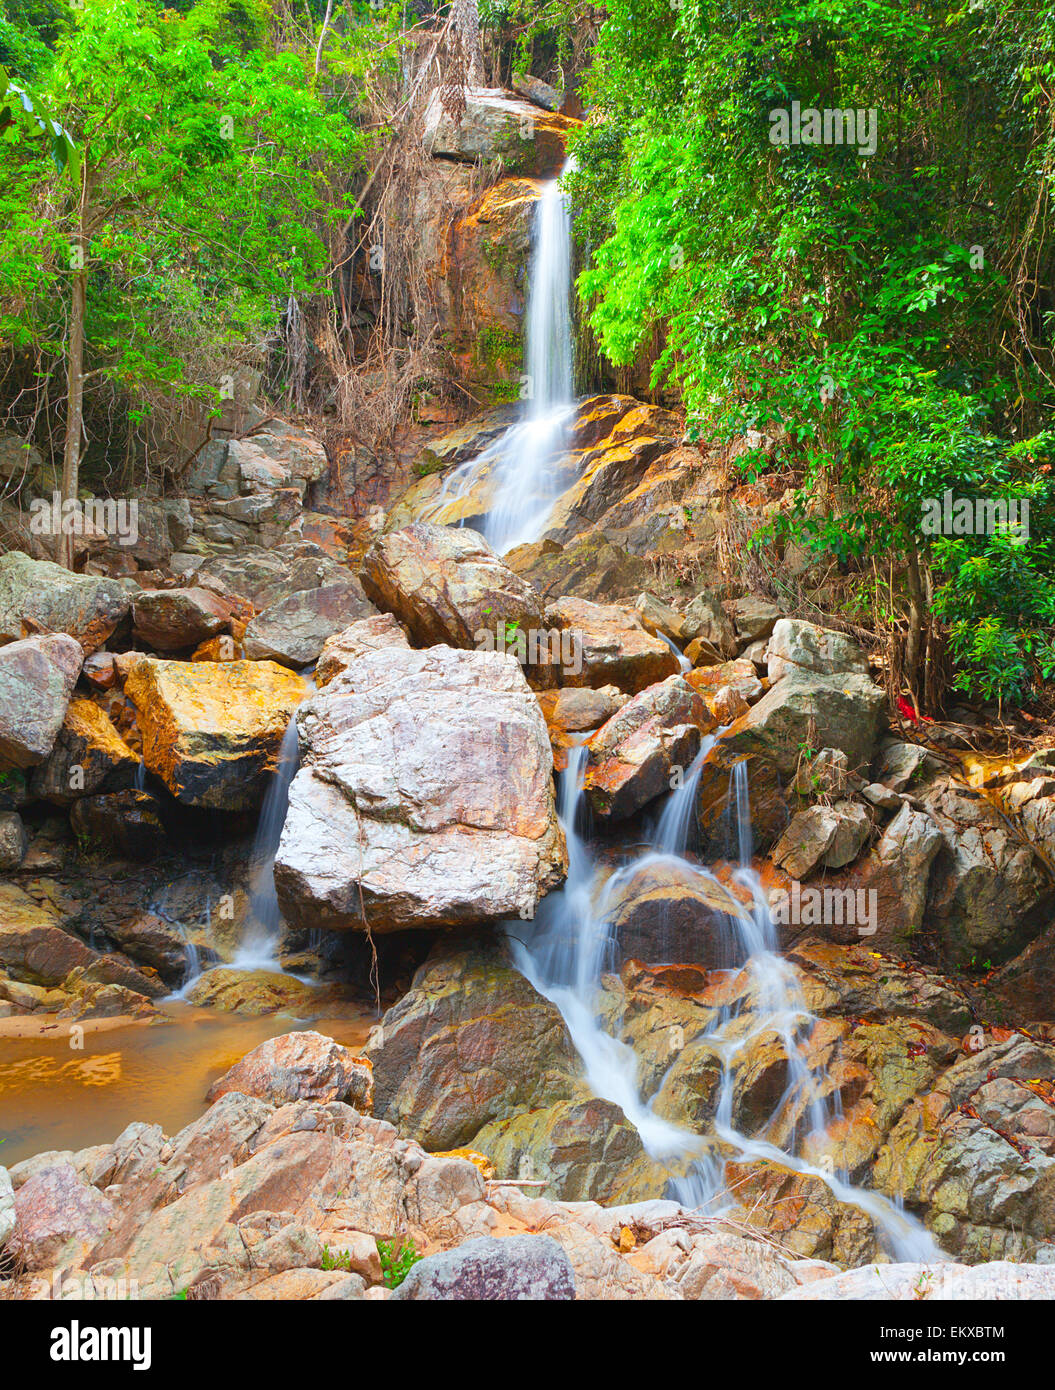 Belle cascade cascade, Koh Samui, Thaïlande Banque D'Images